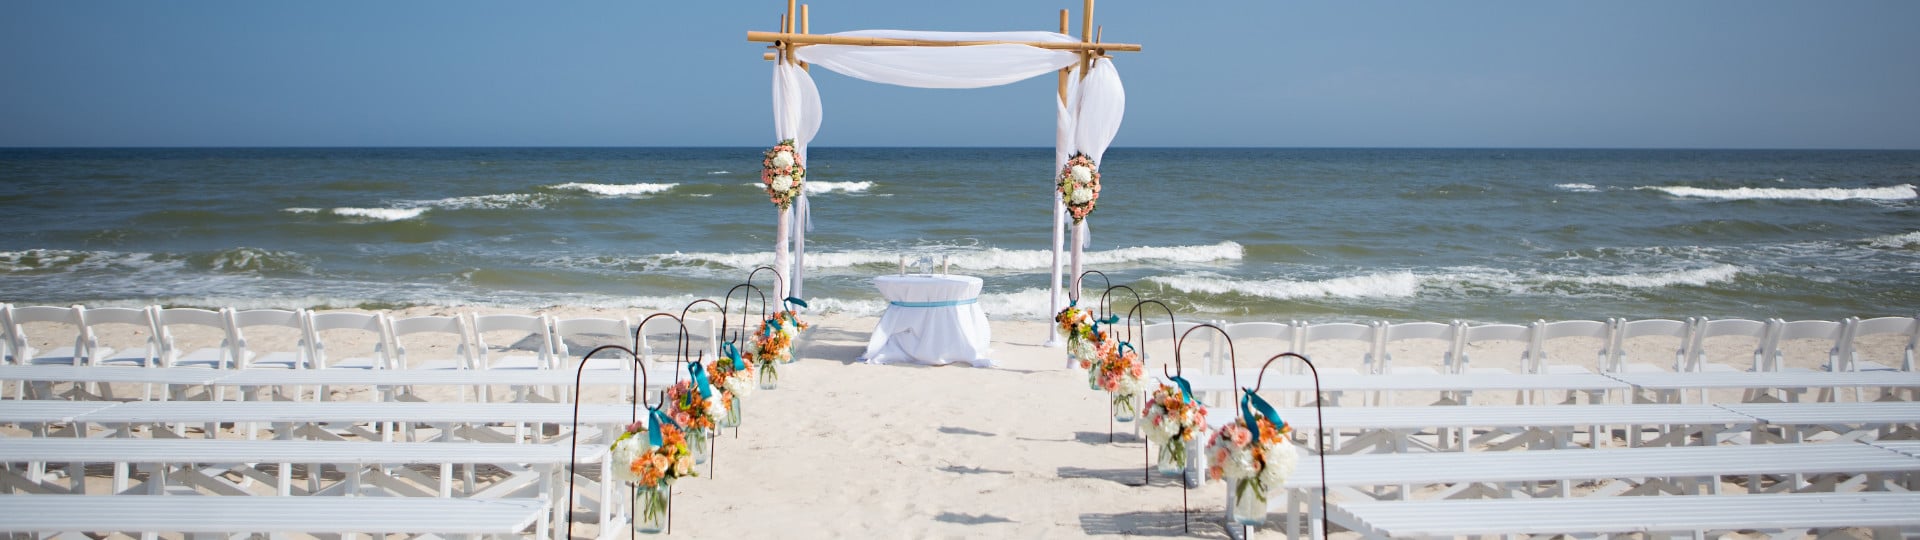 Florida Beach Wedding Venue